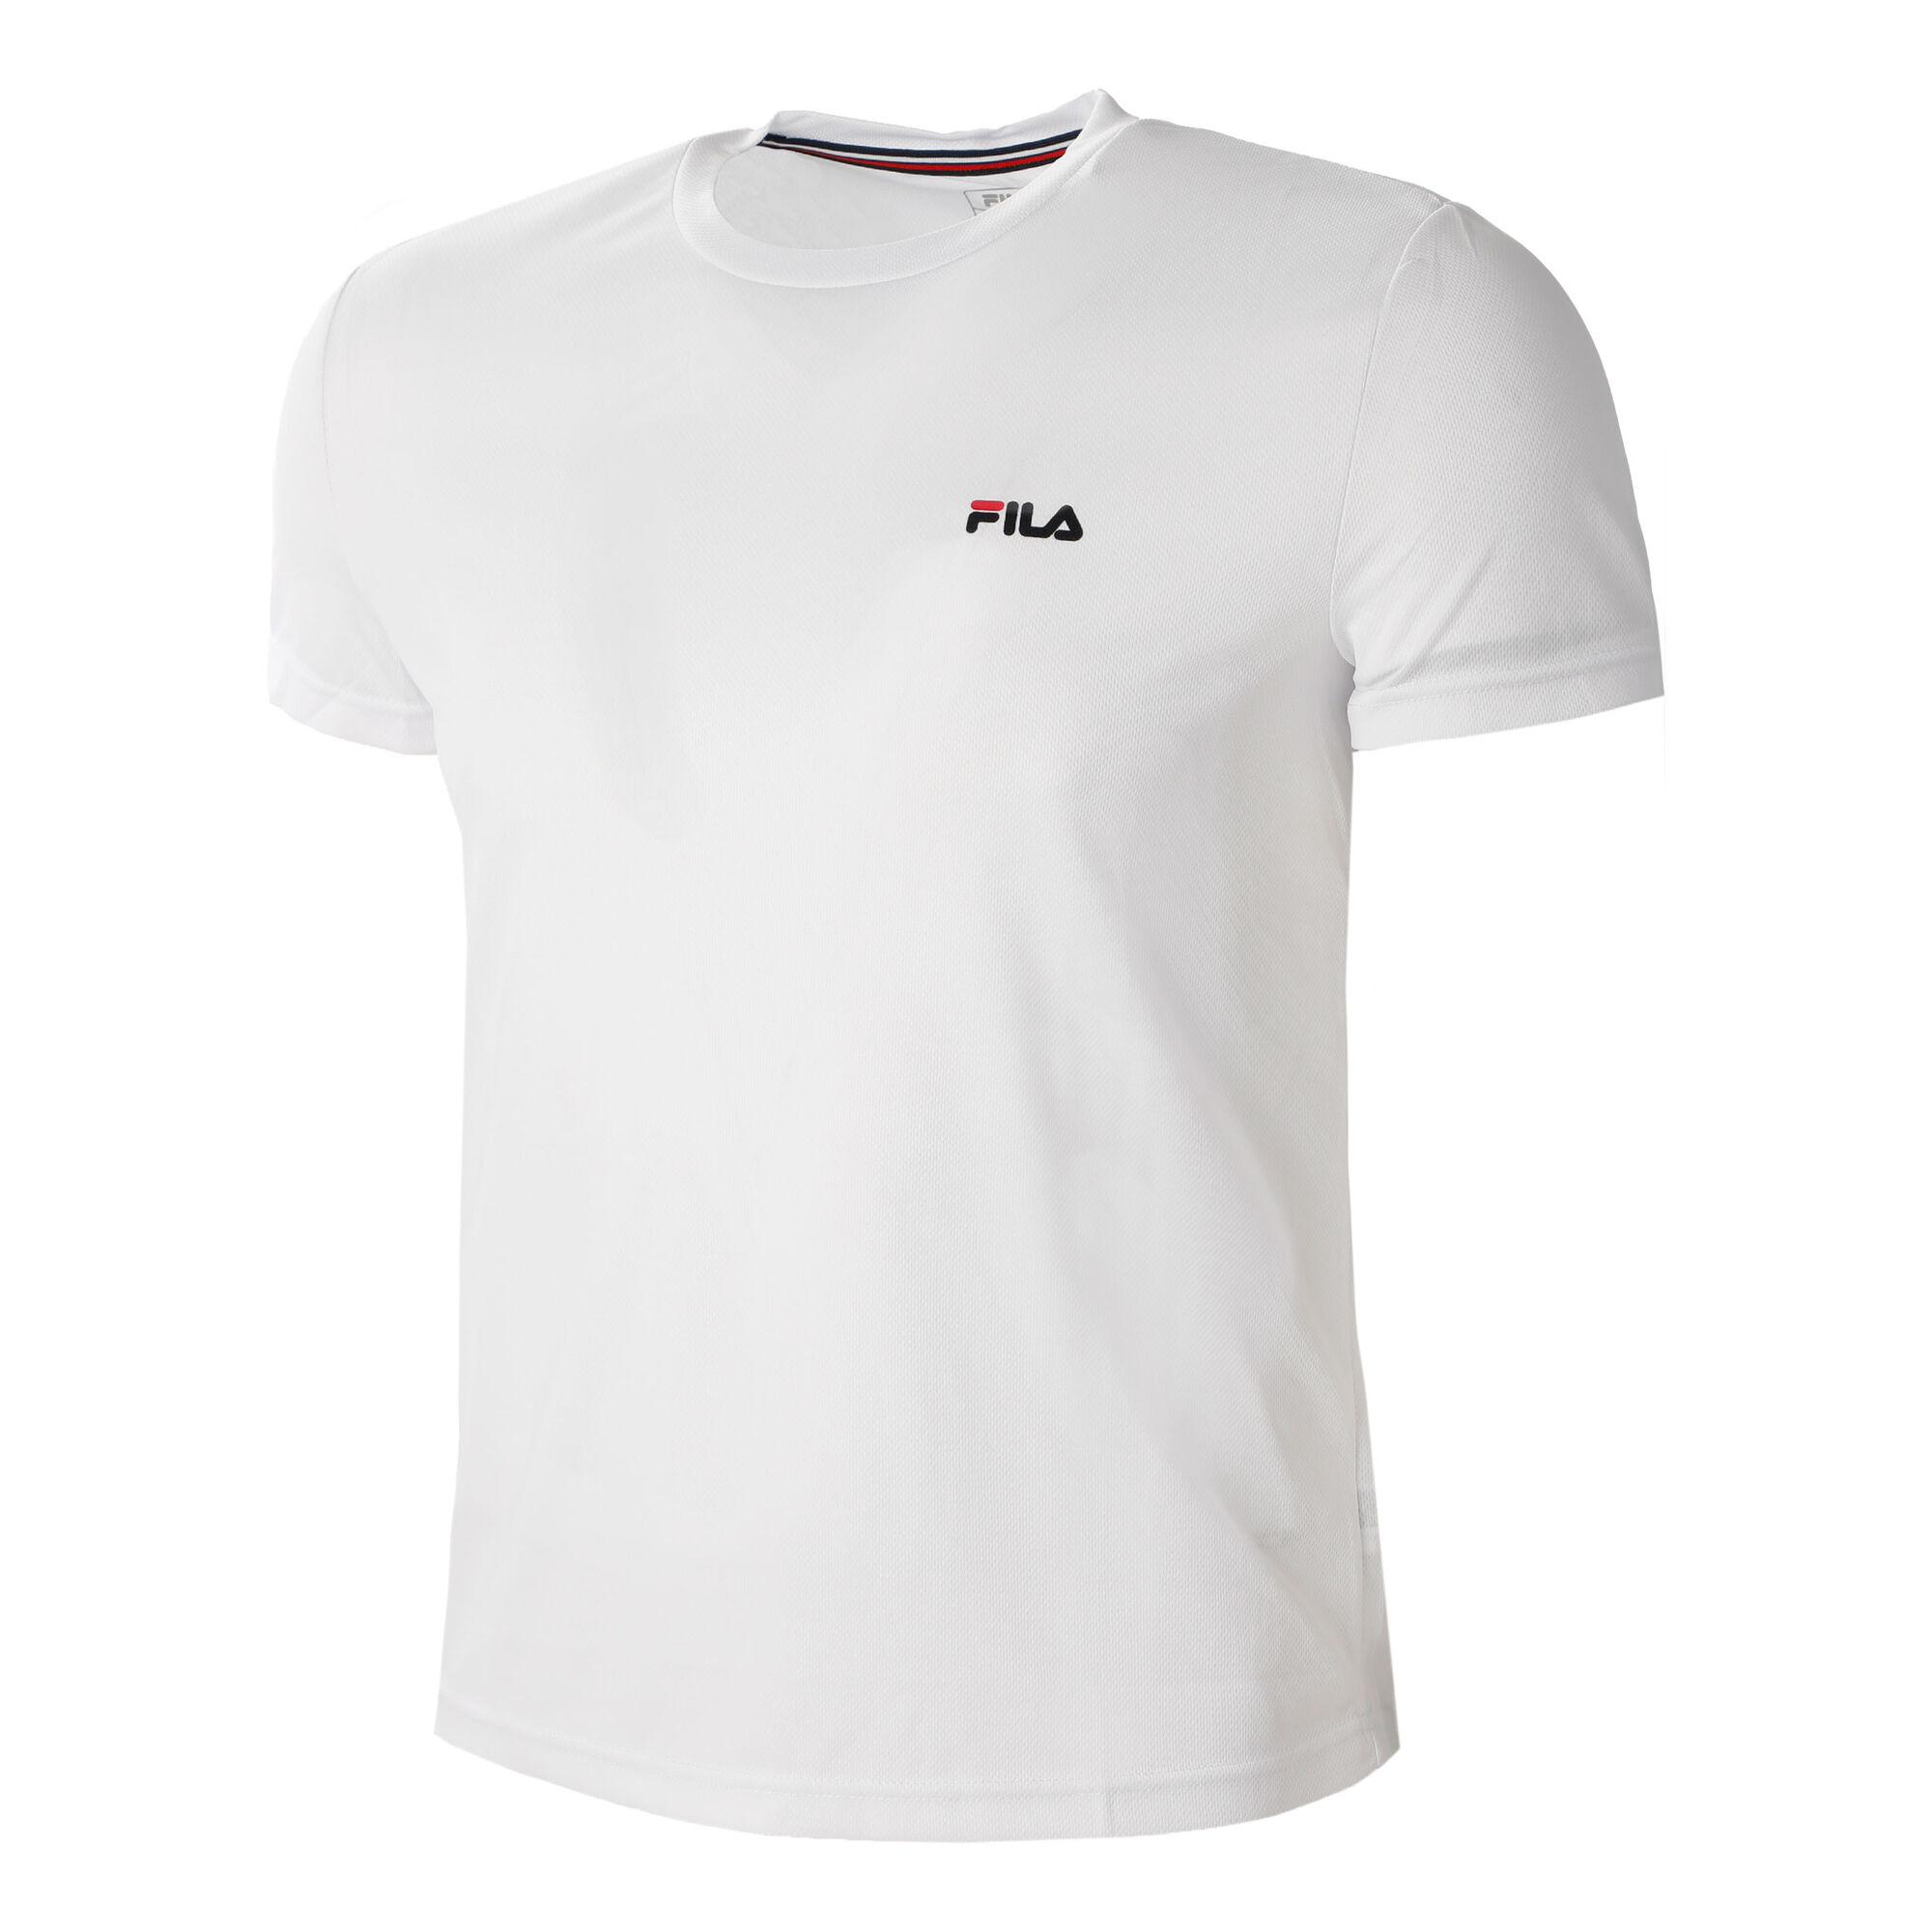 Terminal illoyalitet Waterfront Fila Small Logo T-shirt Herrer - Hvid køb online | Tennis-Point